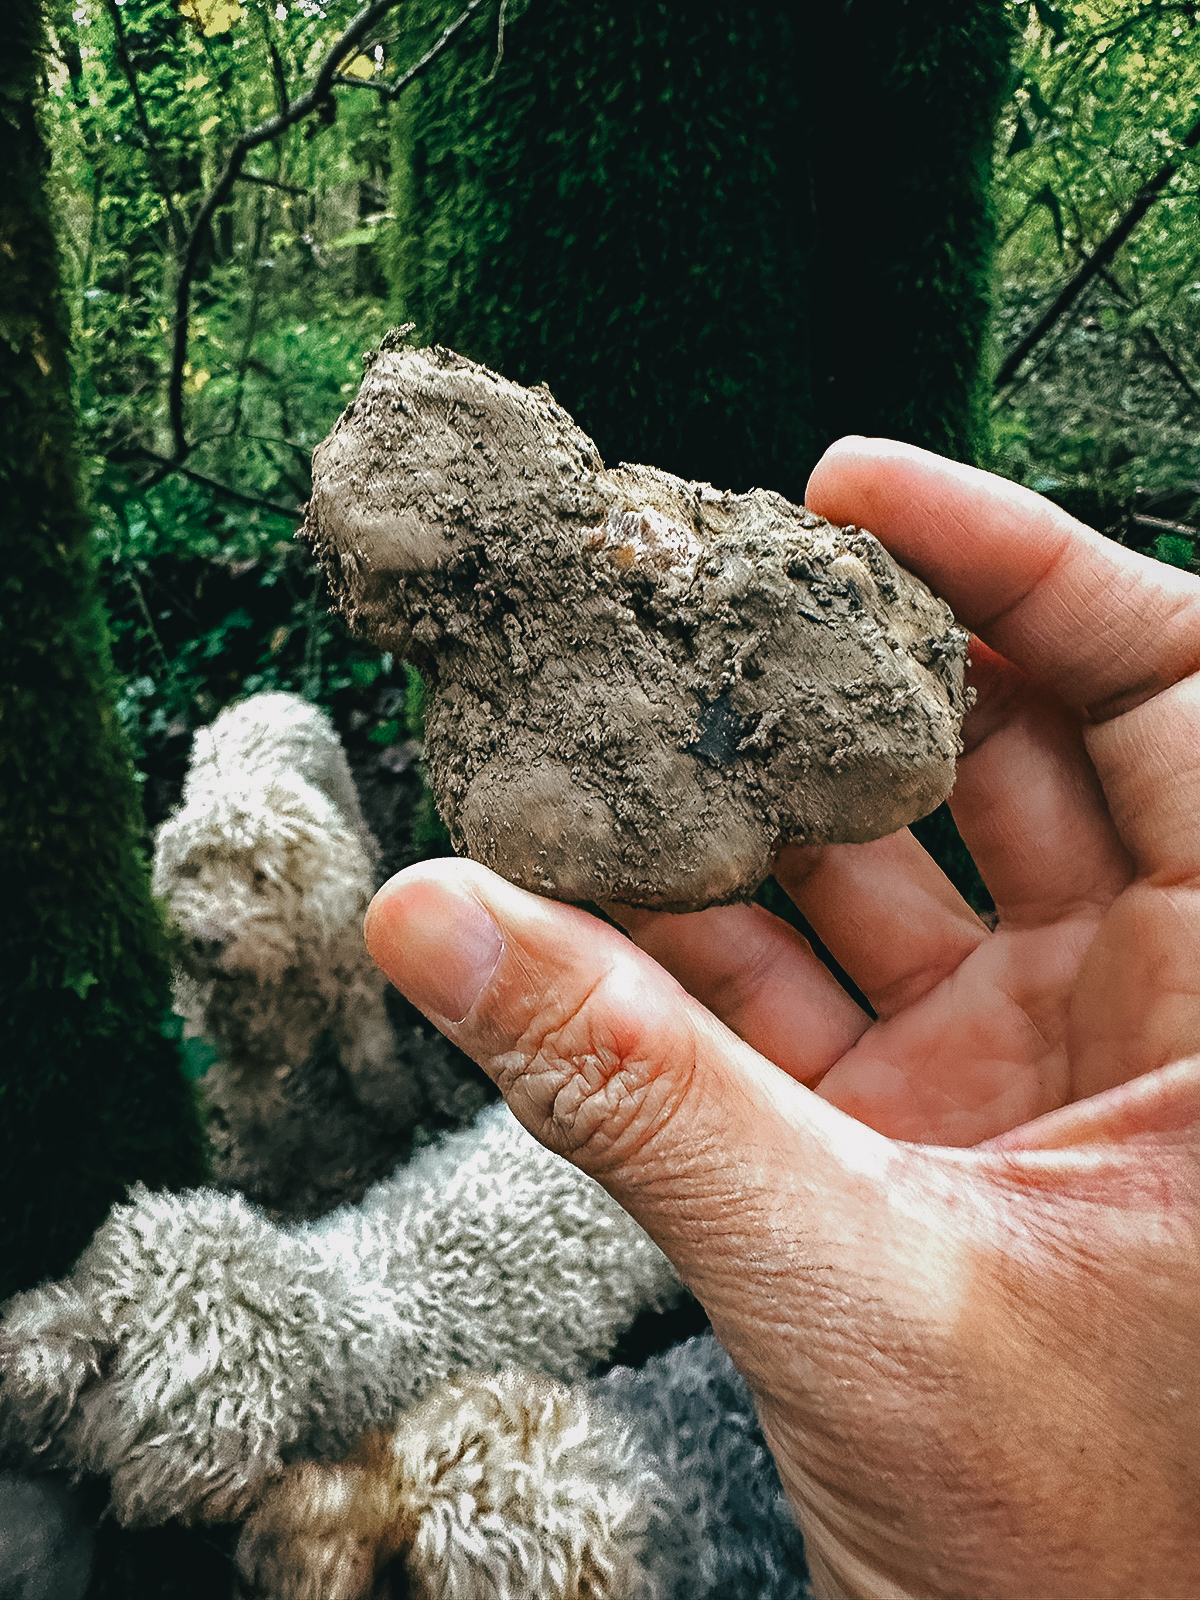 A big white truffle